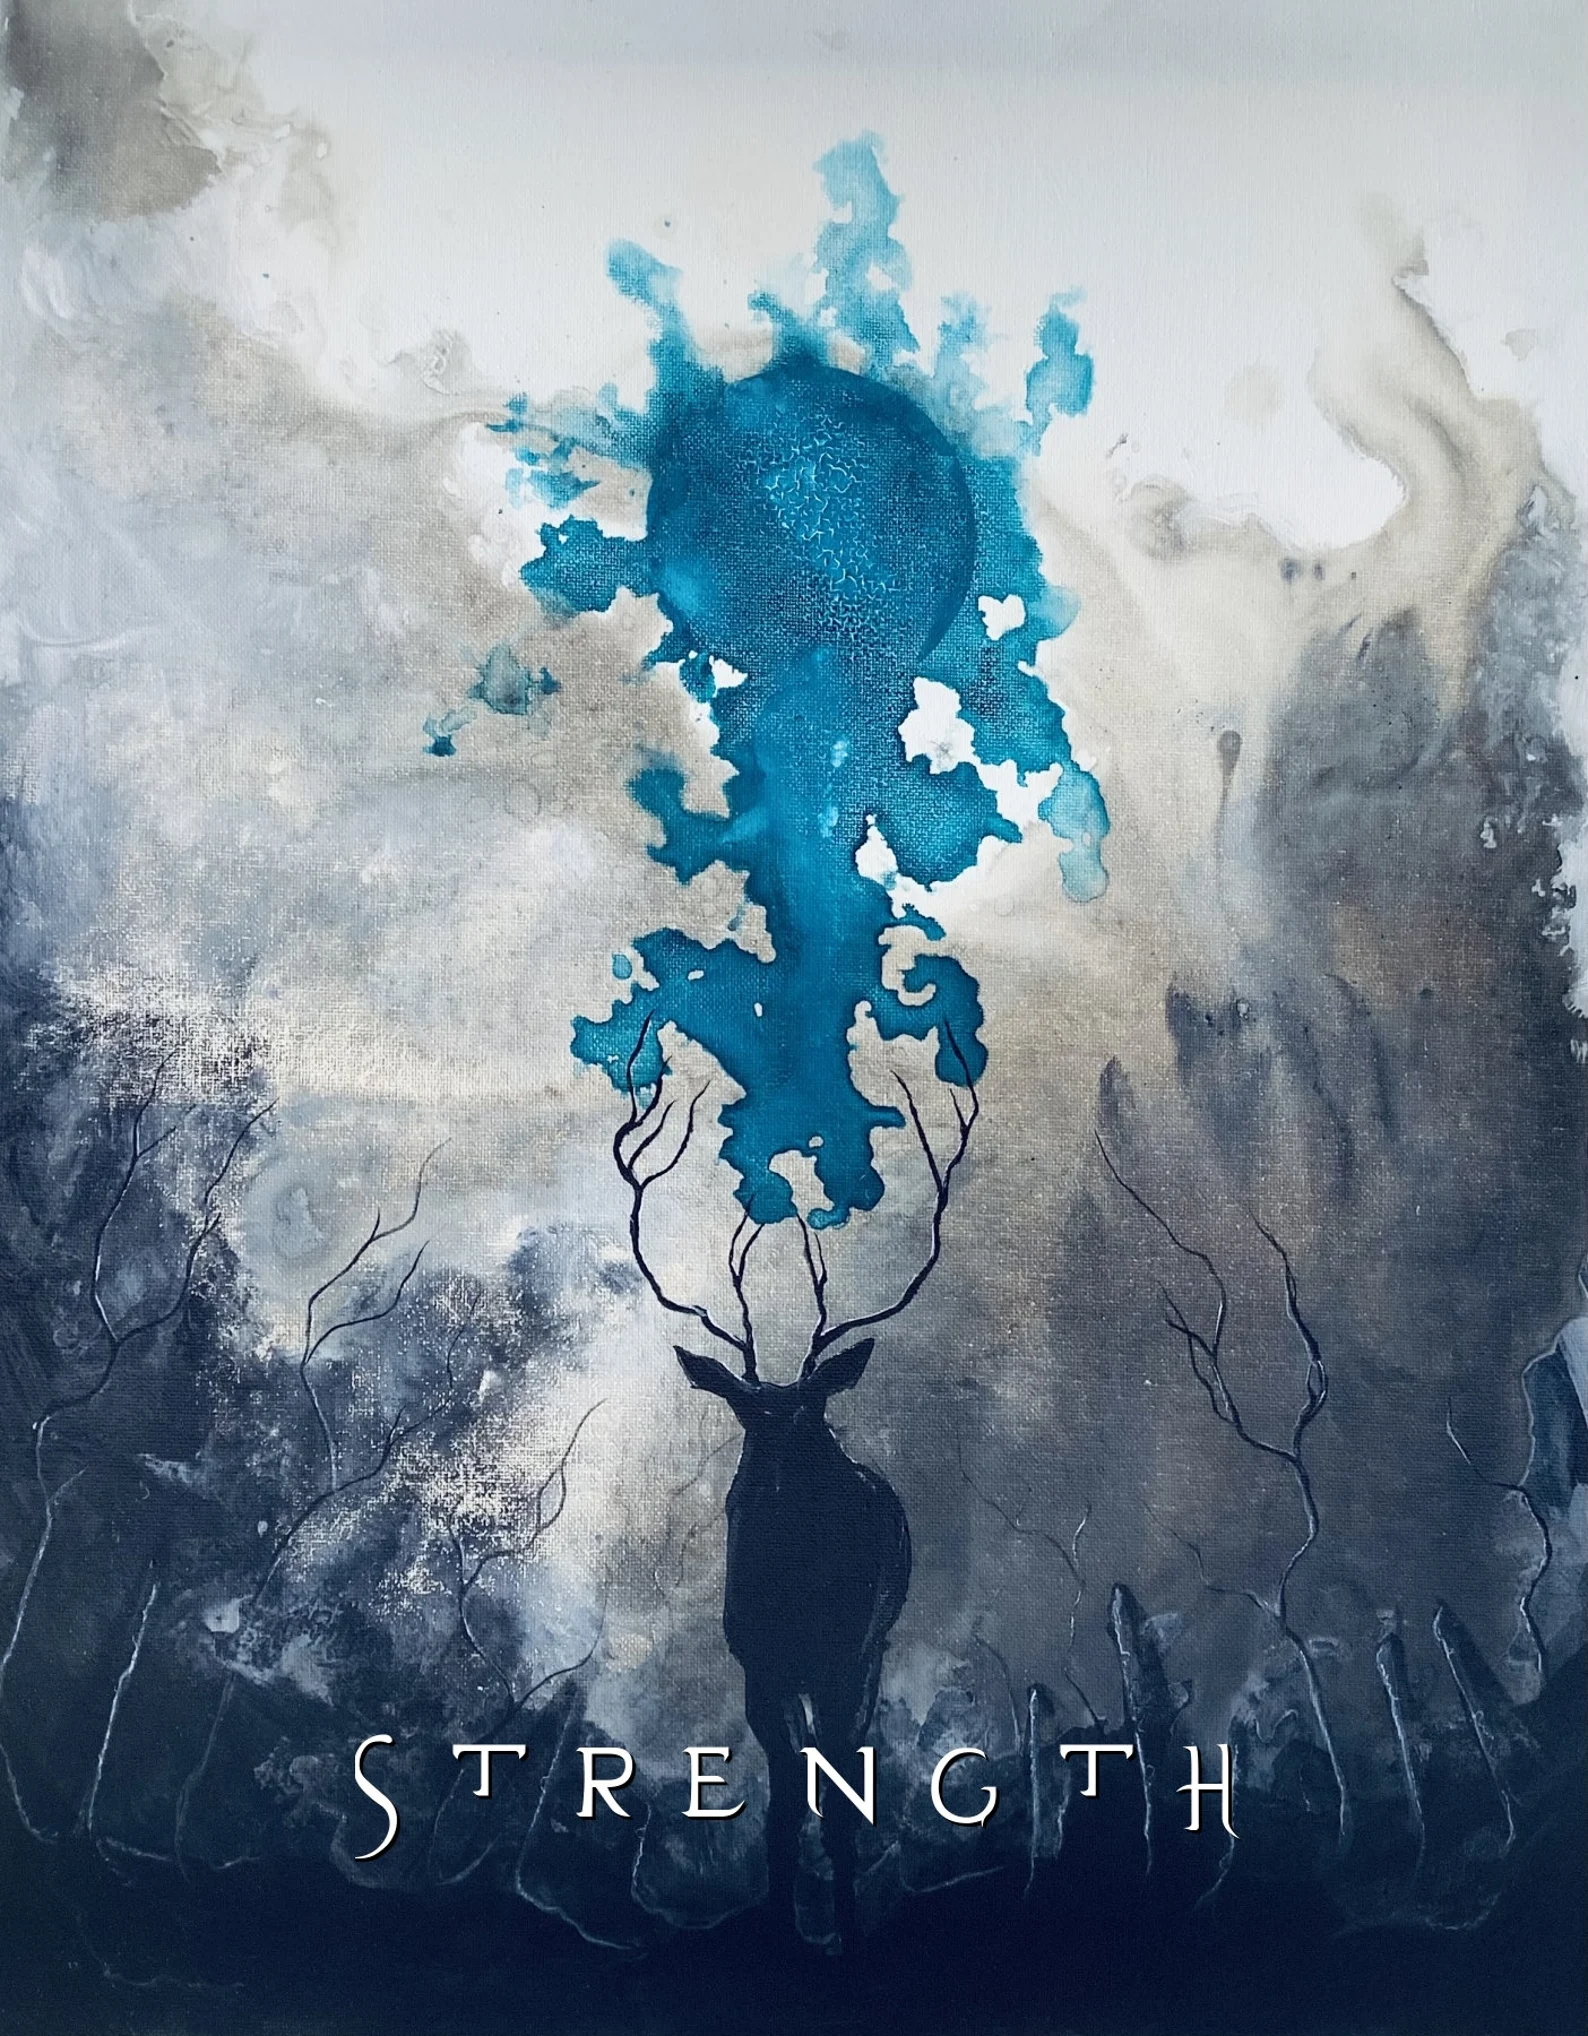 4. Strength